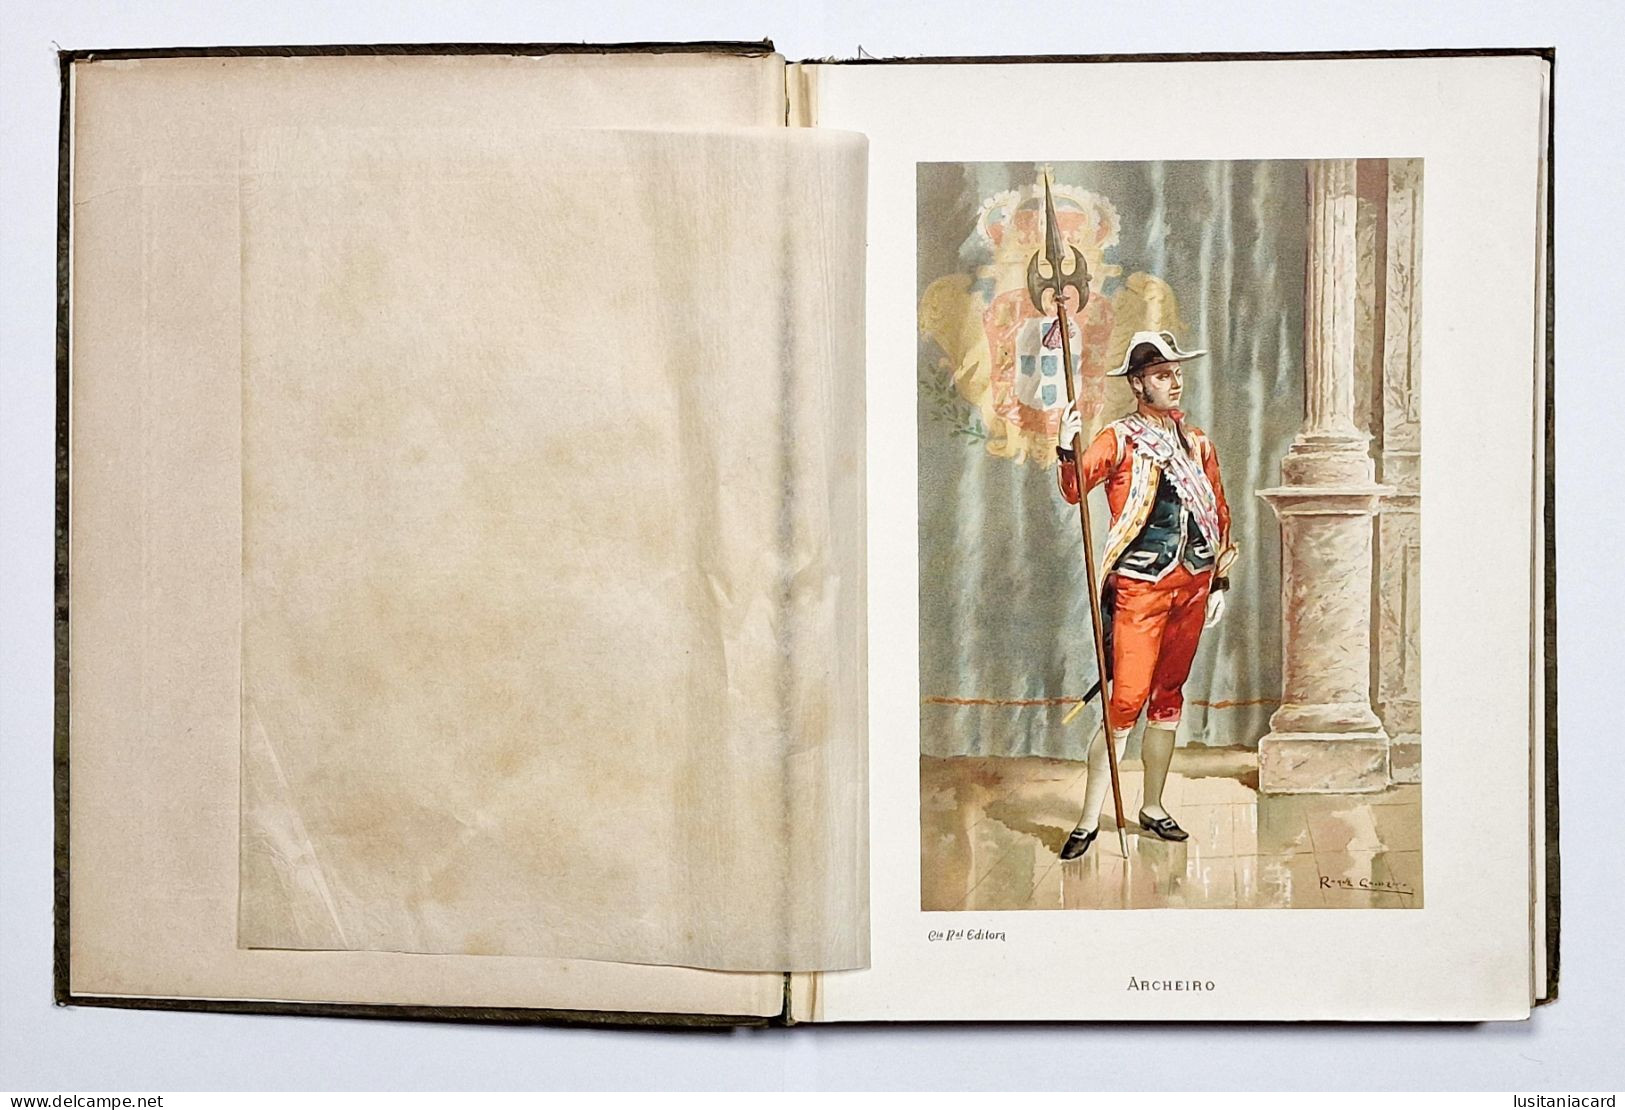 ALBUM DE COSTUMES PORTUGUEZES - Cincoenta Chromos (RARO)( Ed. David Corazzi - 1888 / Ed. Typ.Horas Romanticas) - Oude Boeken